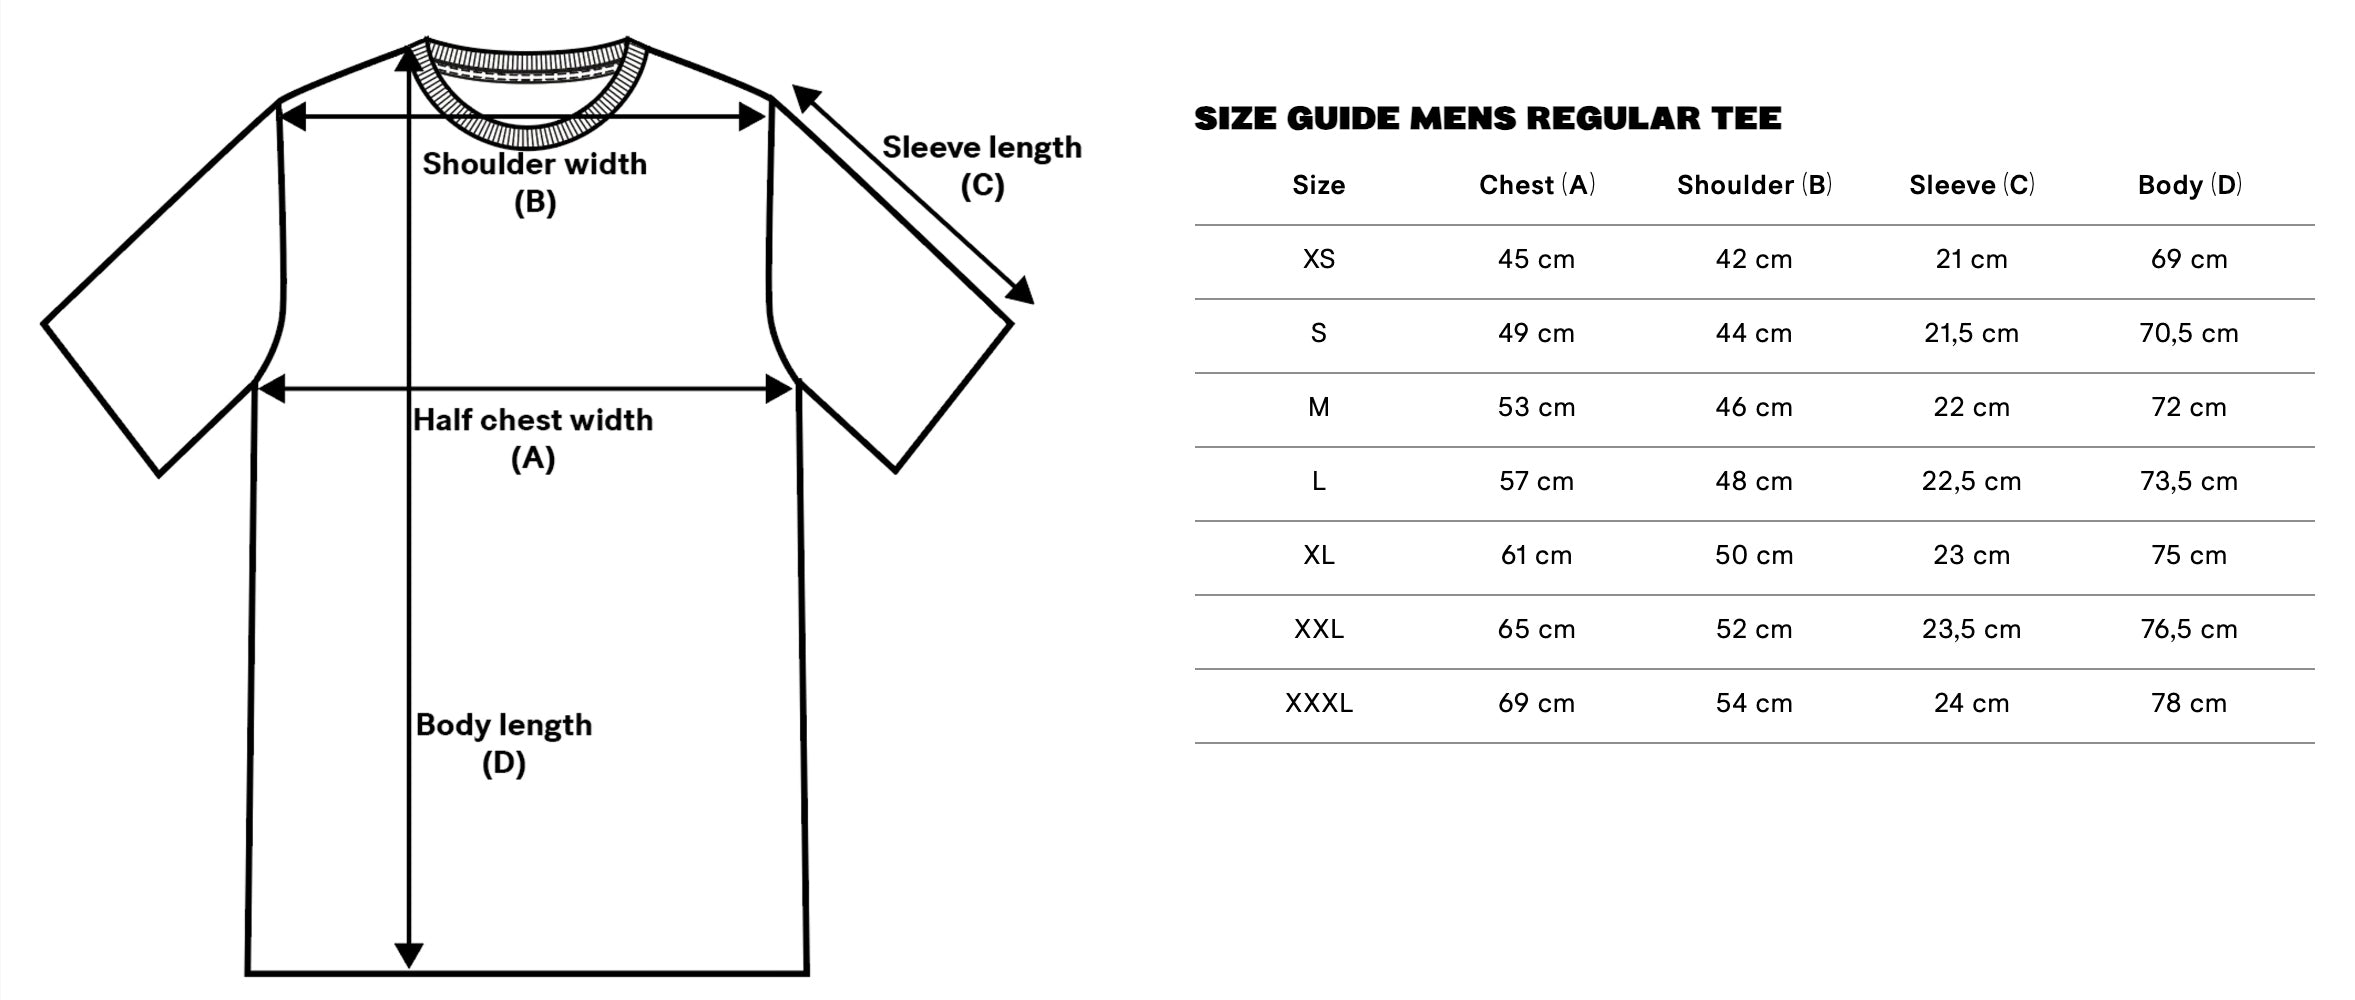 Size guide mens regular tee